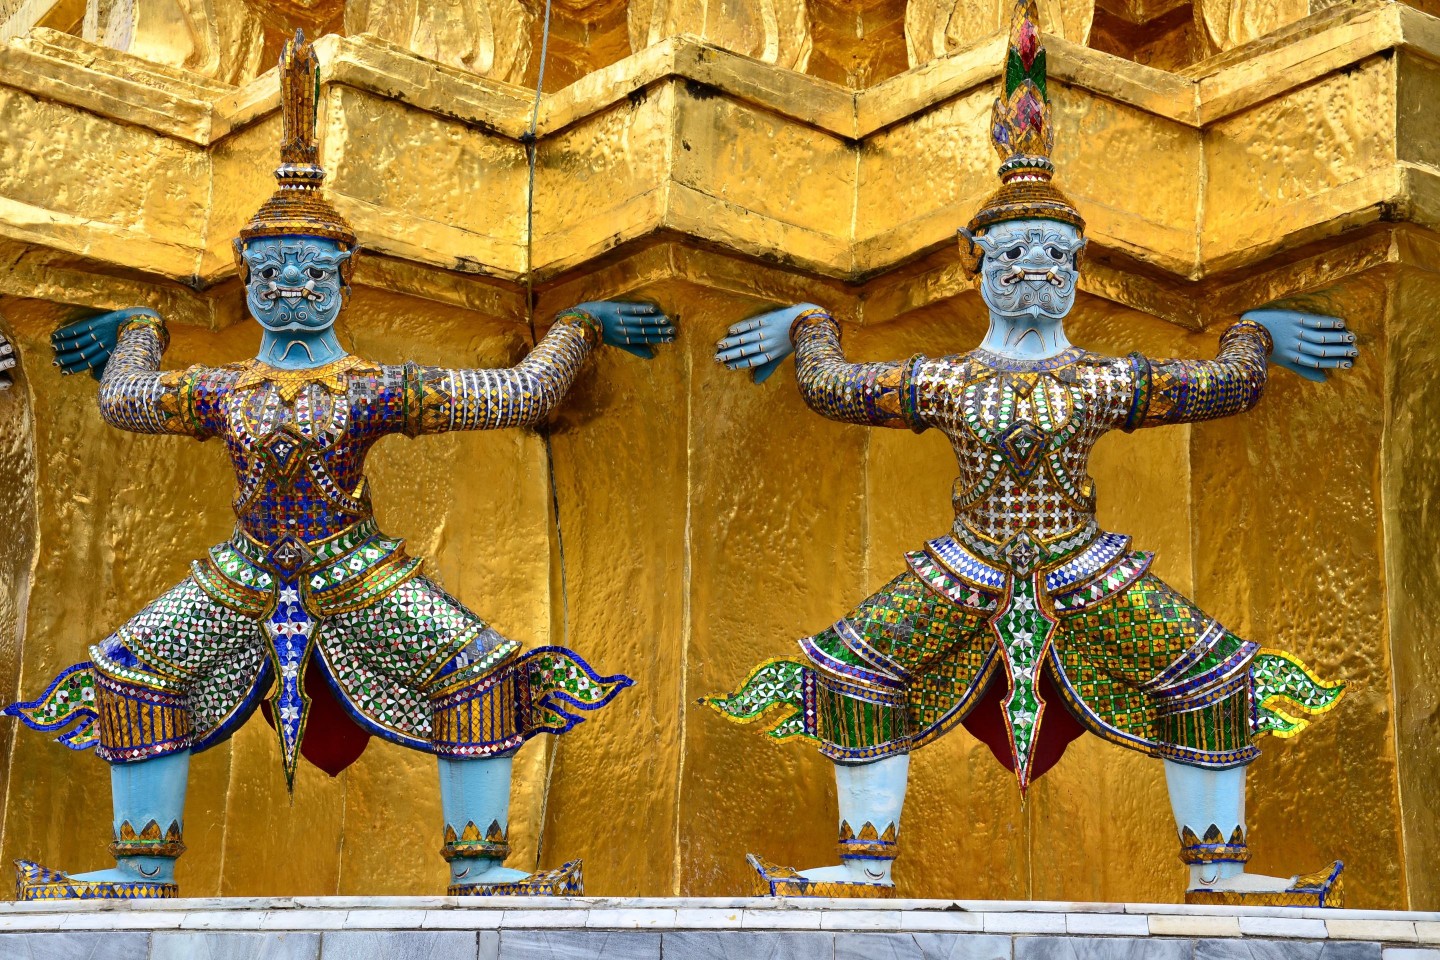 The Temple of the Emerald Buddha or Wat Phra Kaew